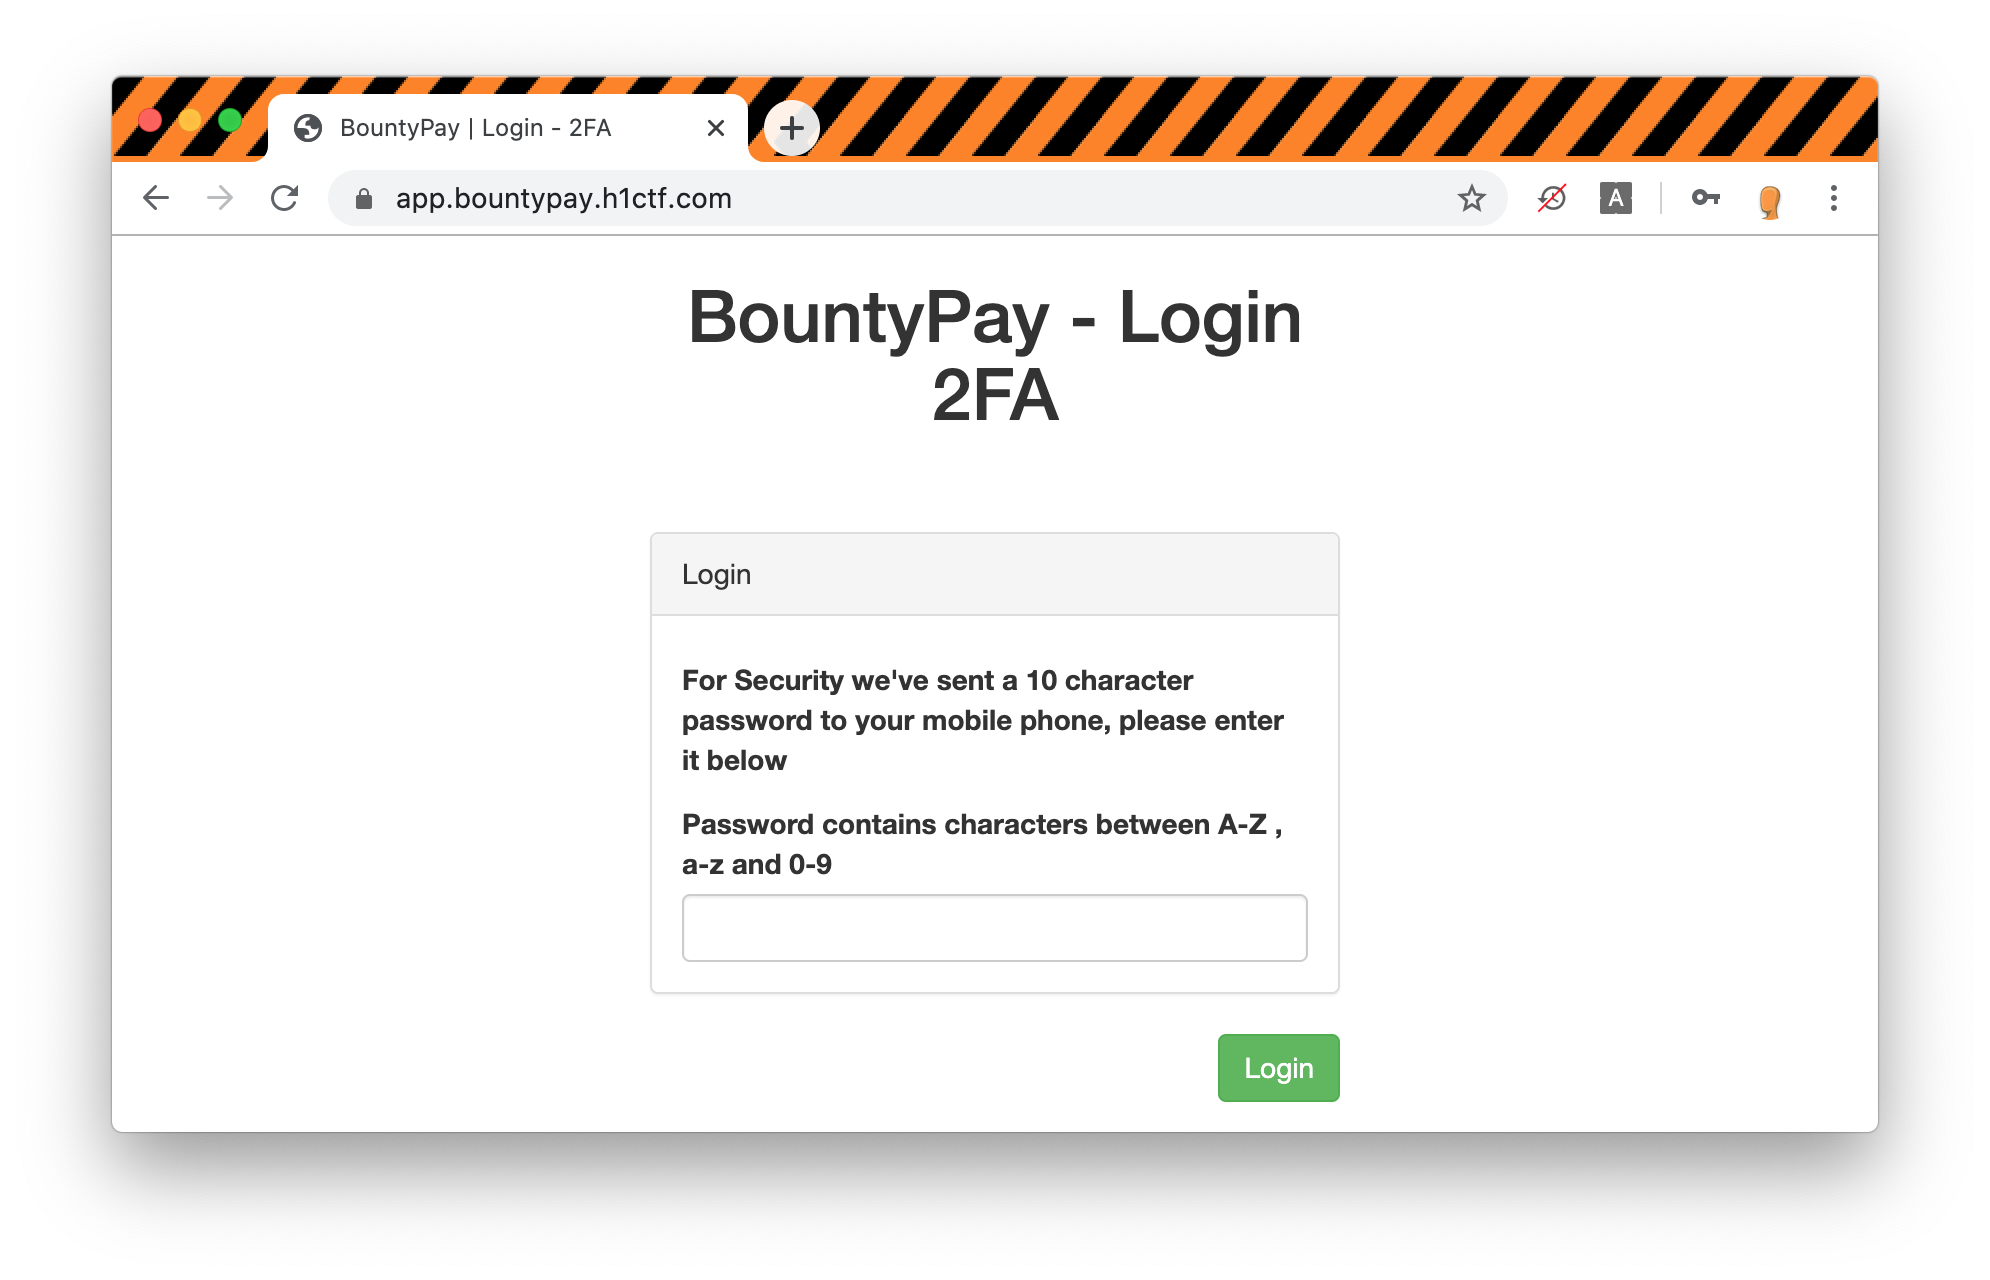 BountyPay - Login 2FA